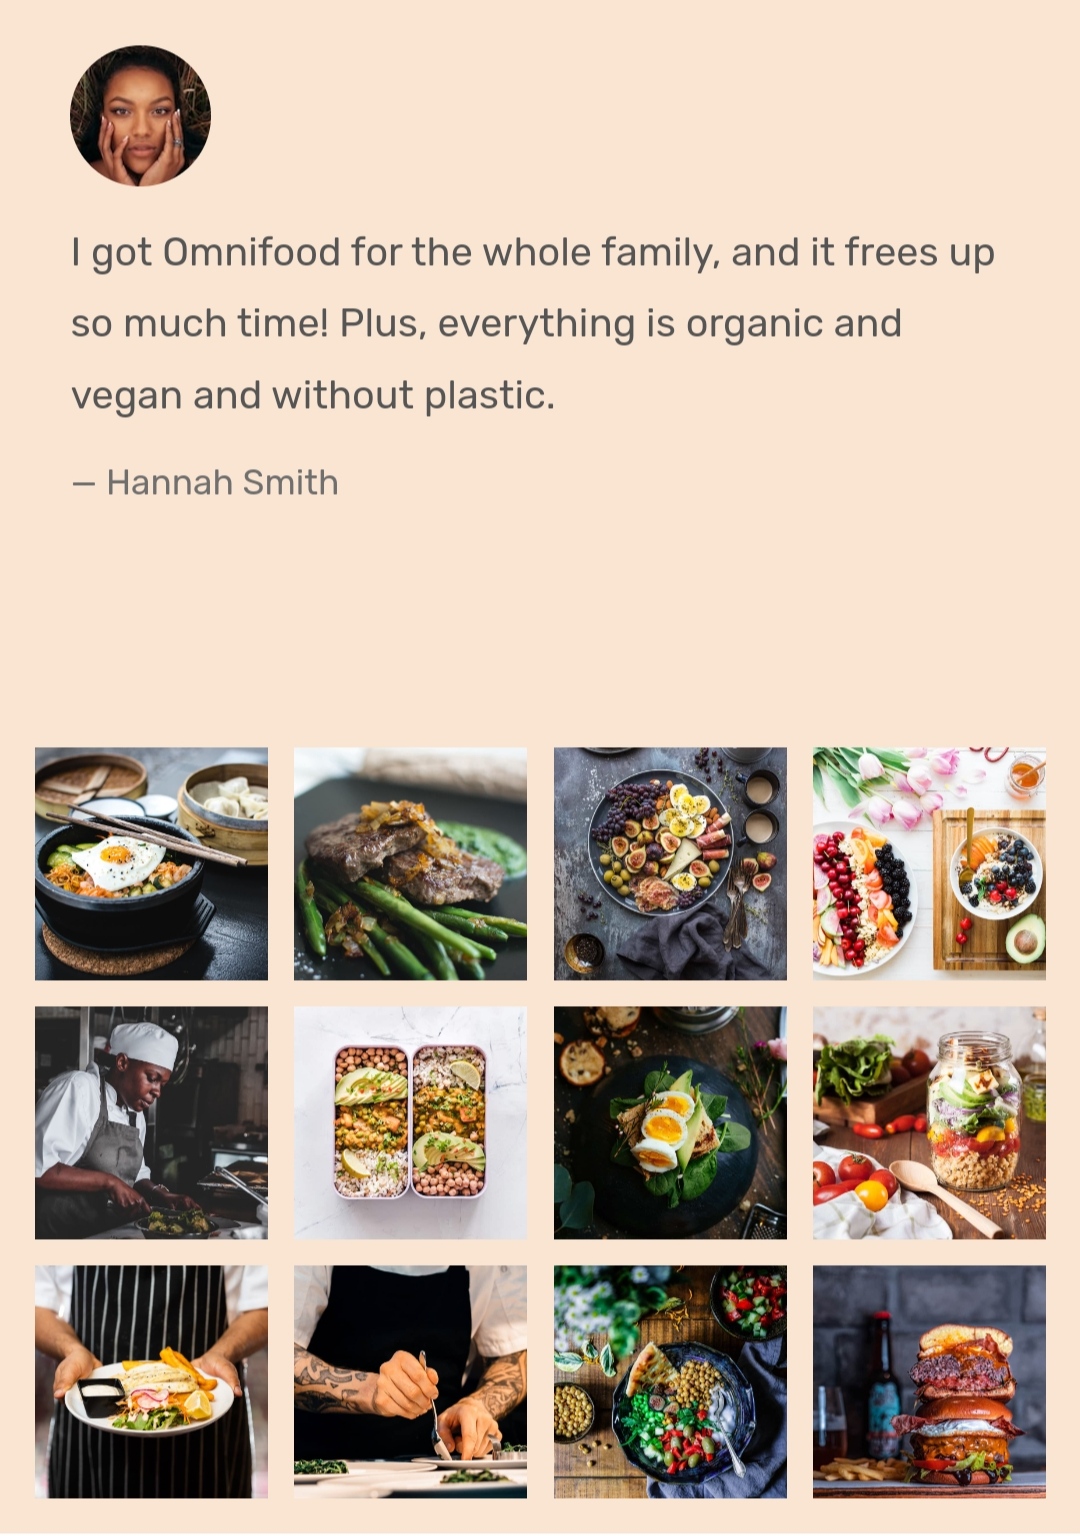 Image gallery of Omnifood website in mobile view.